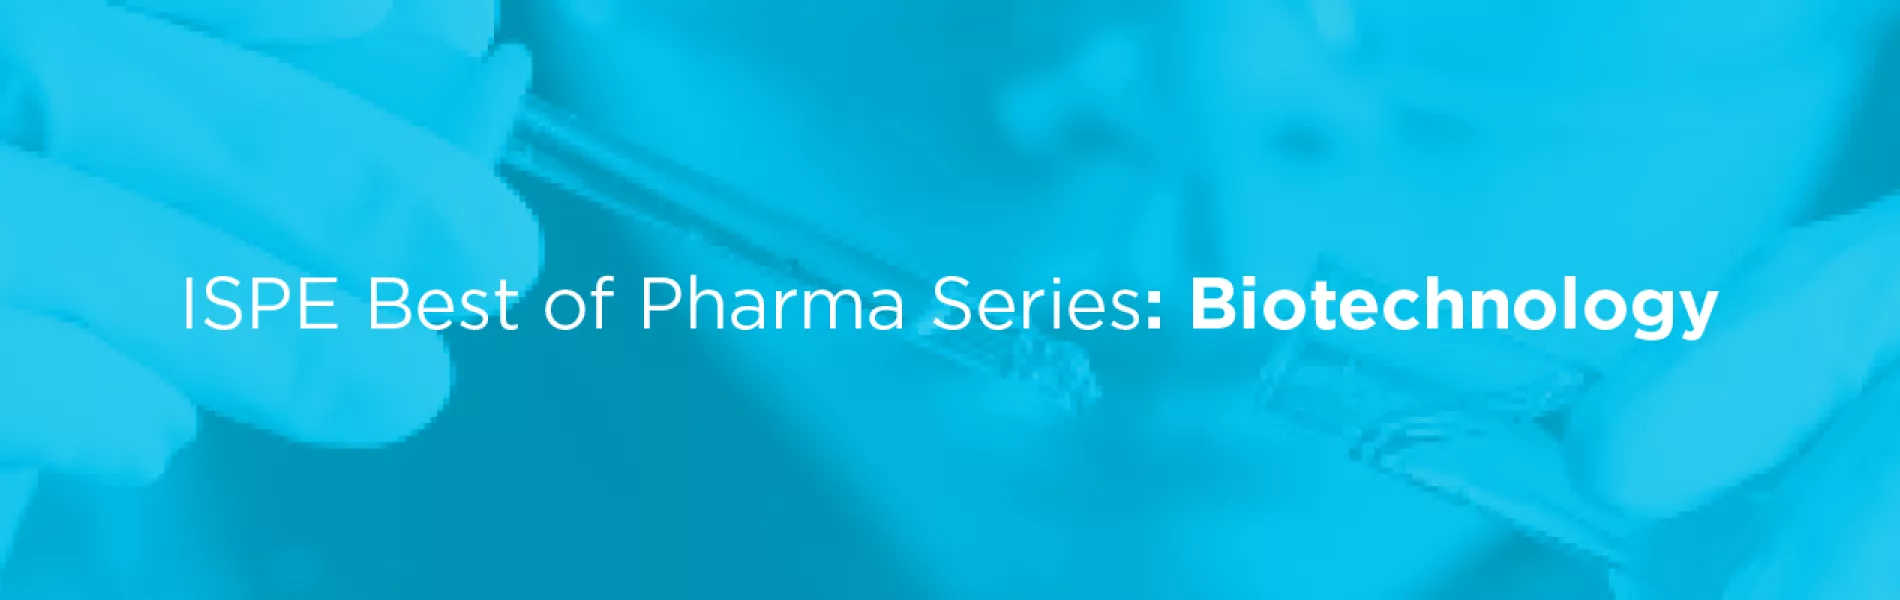 ISPE Best of Pharma Series: Biotechnology